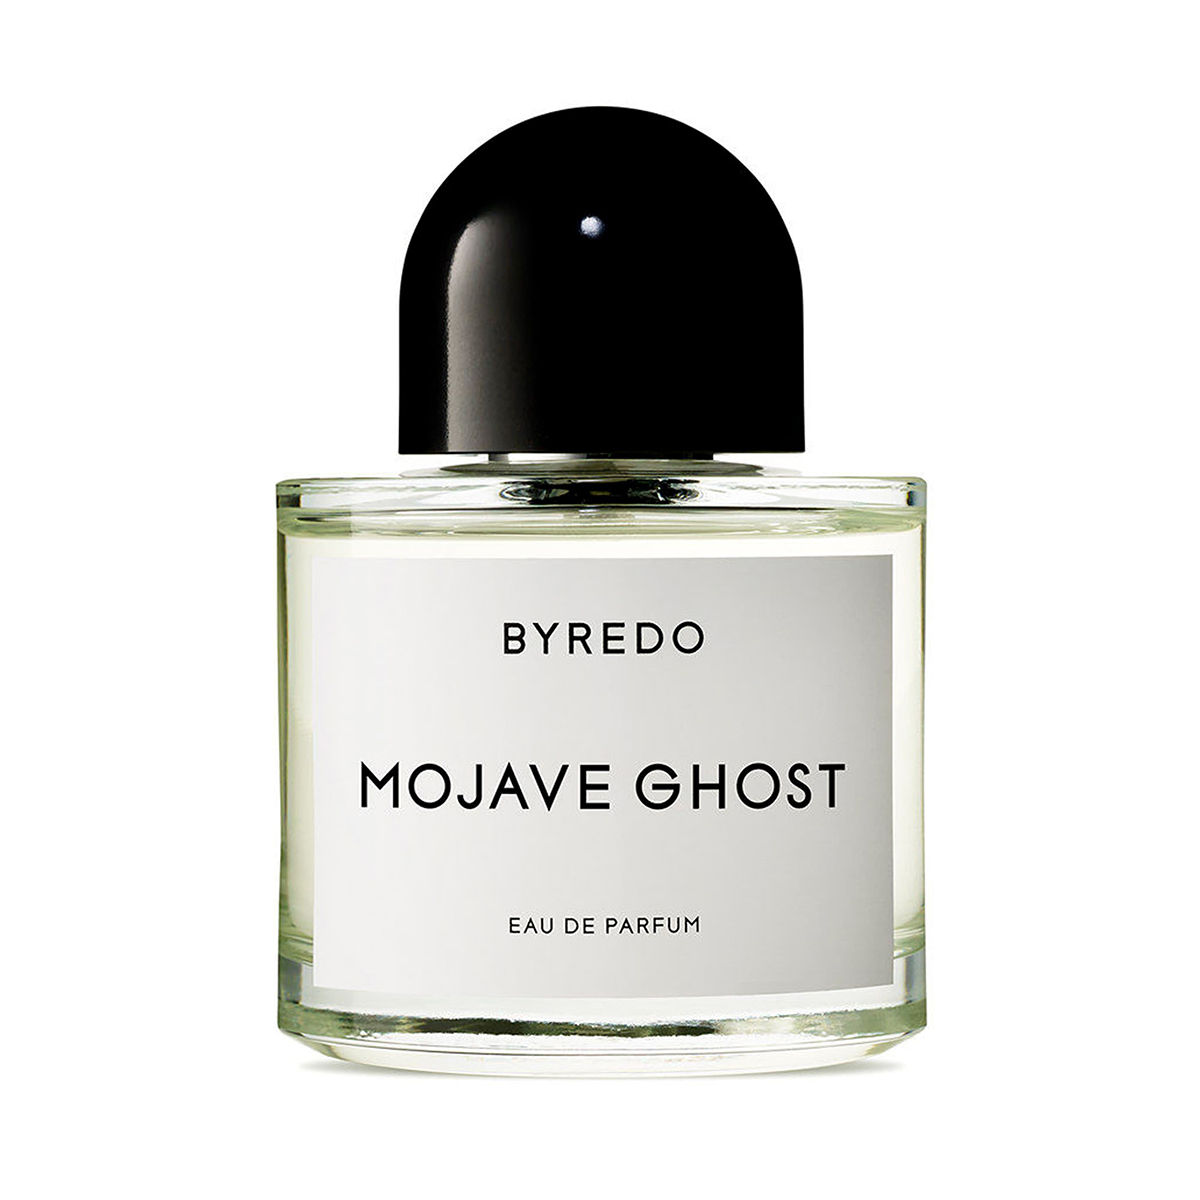 Byredo Mojave Ghost Eau de Parfum, 50ml